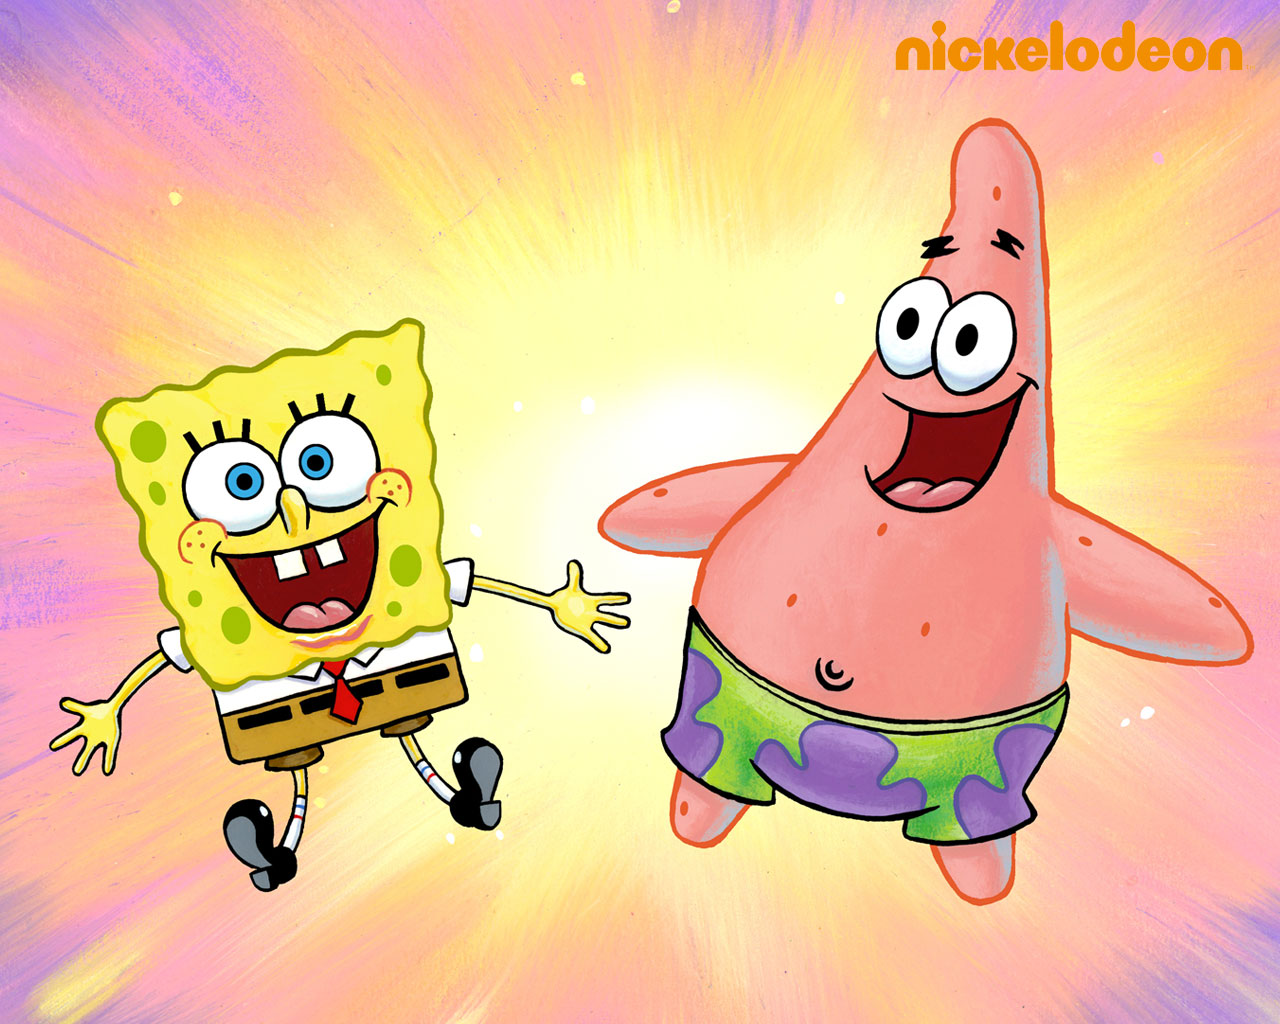 Spongebob and Patrick wallpaper - Spongebob Squarepants Wallpaper